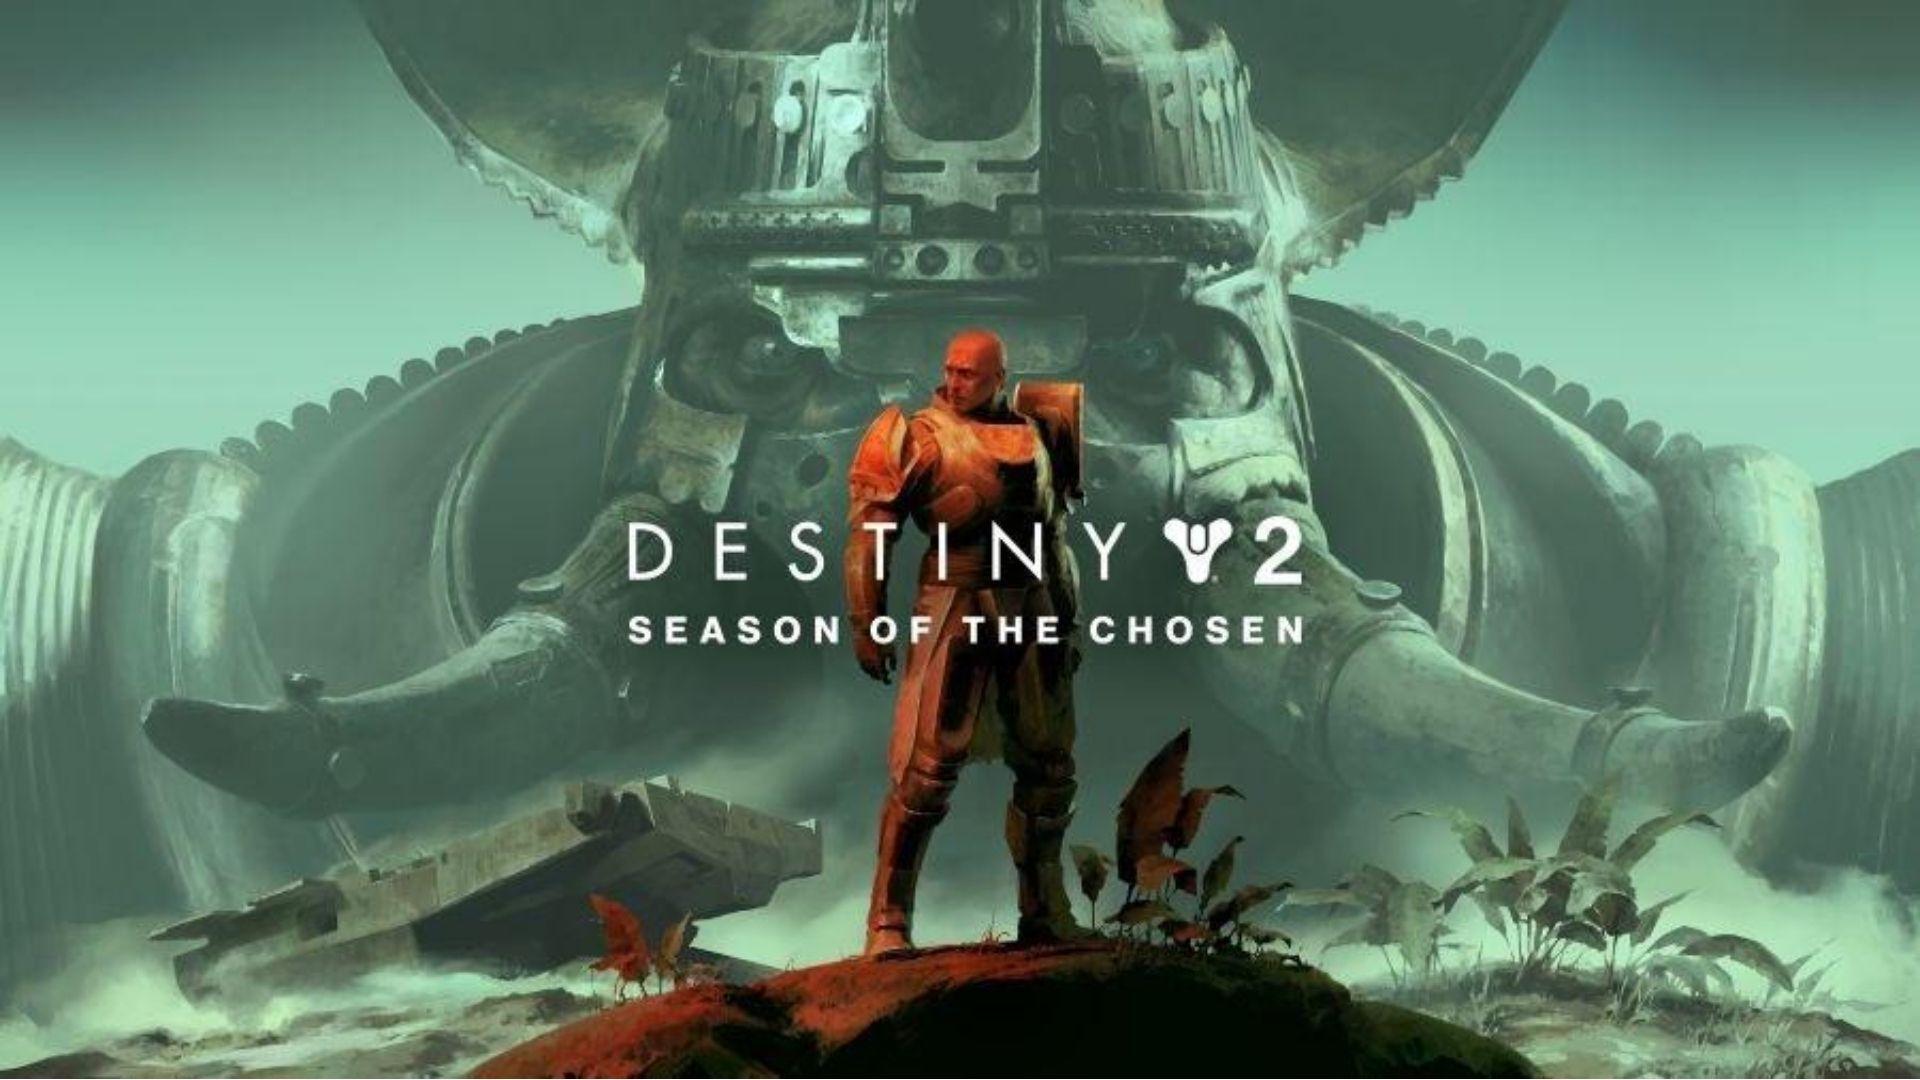 destiny 2 season of the chosen leaked image